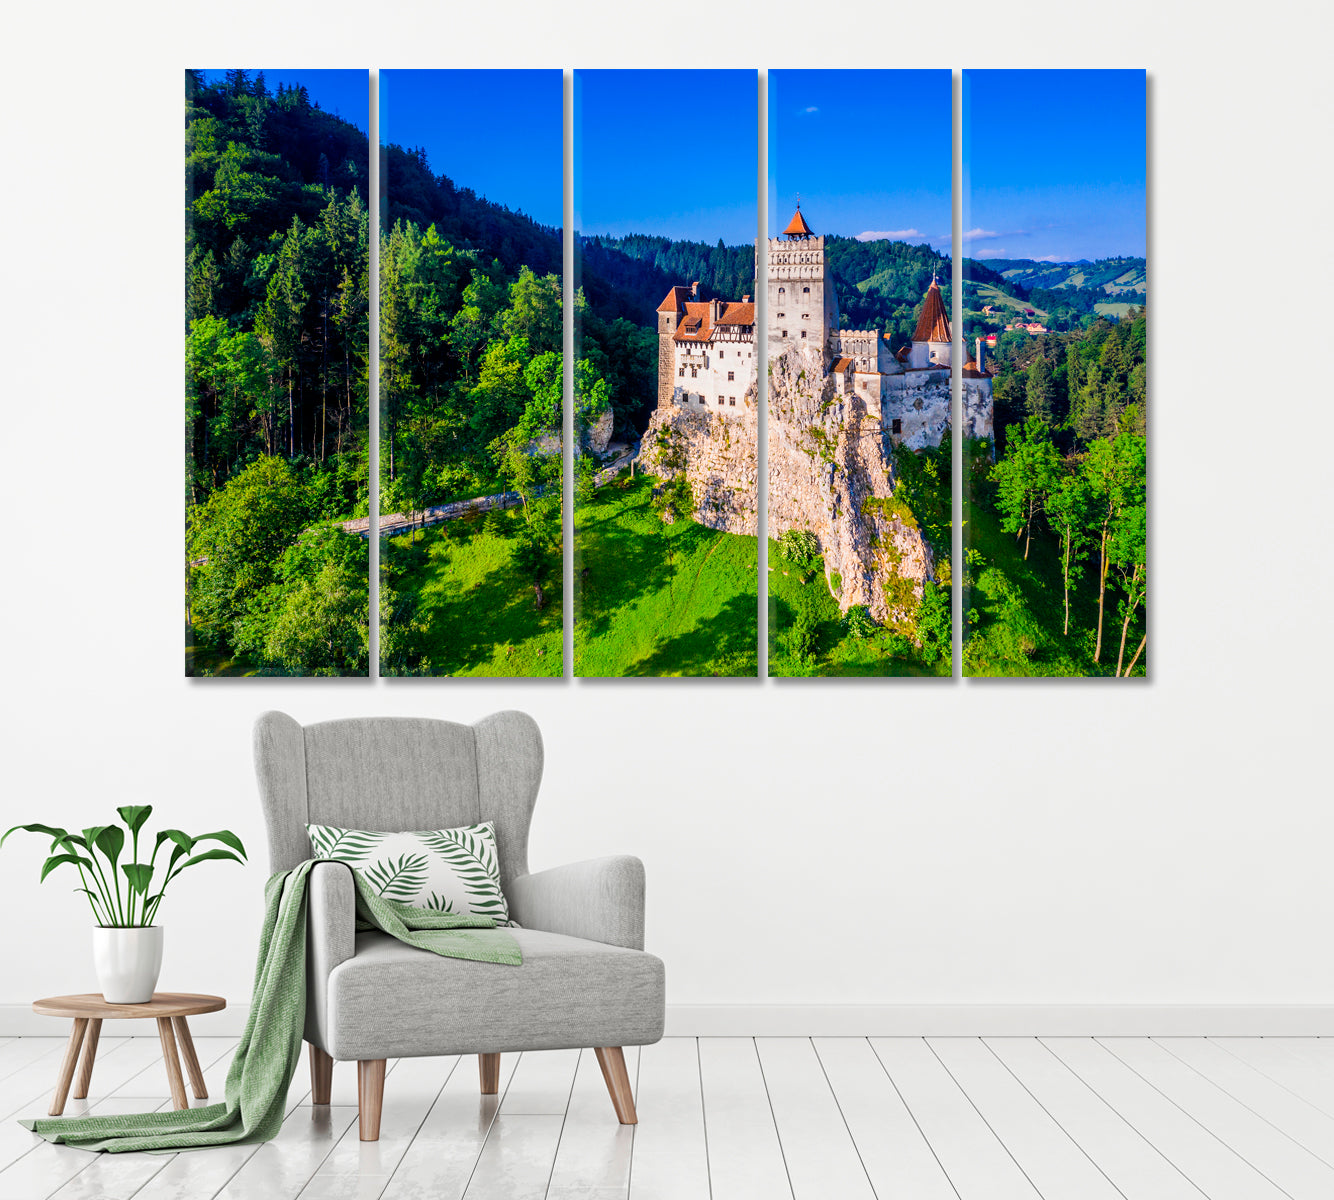 Bran Castle Transylvania Romania Canvas Print ArtLexy 5 Panels 36"x24" inches 